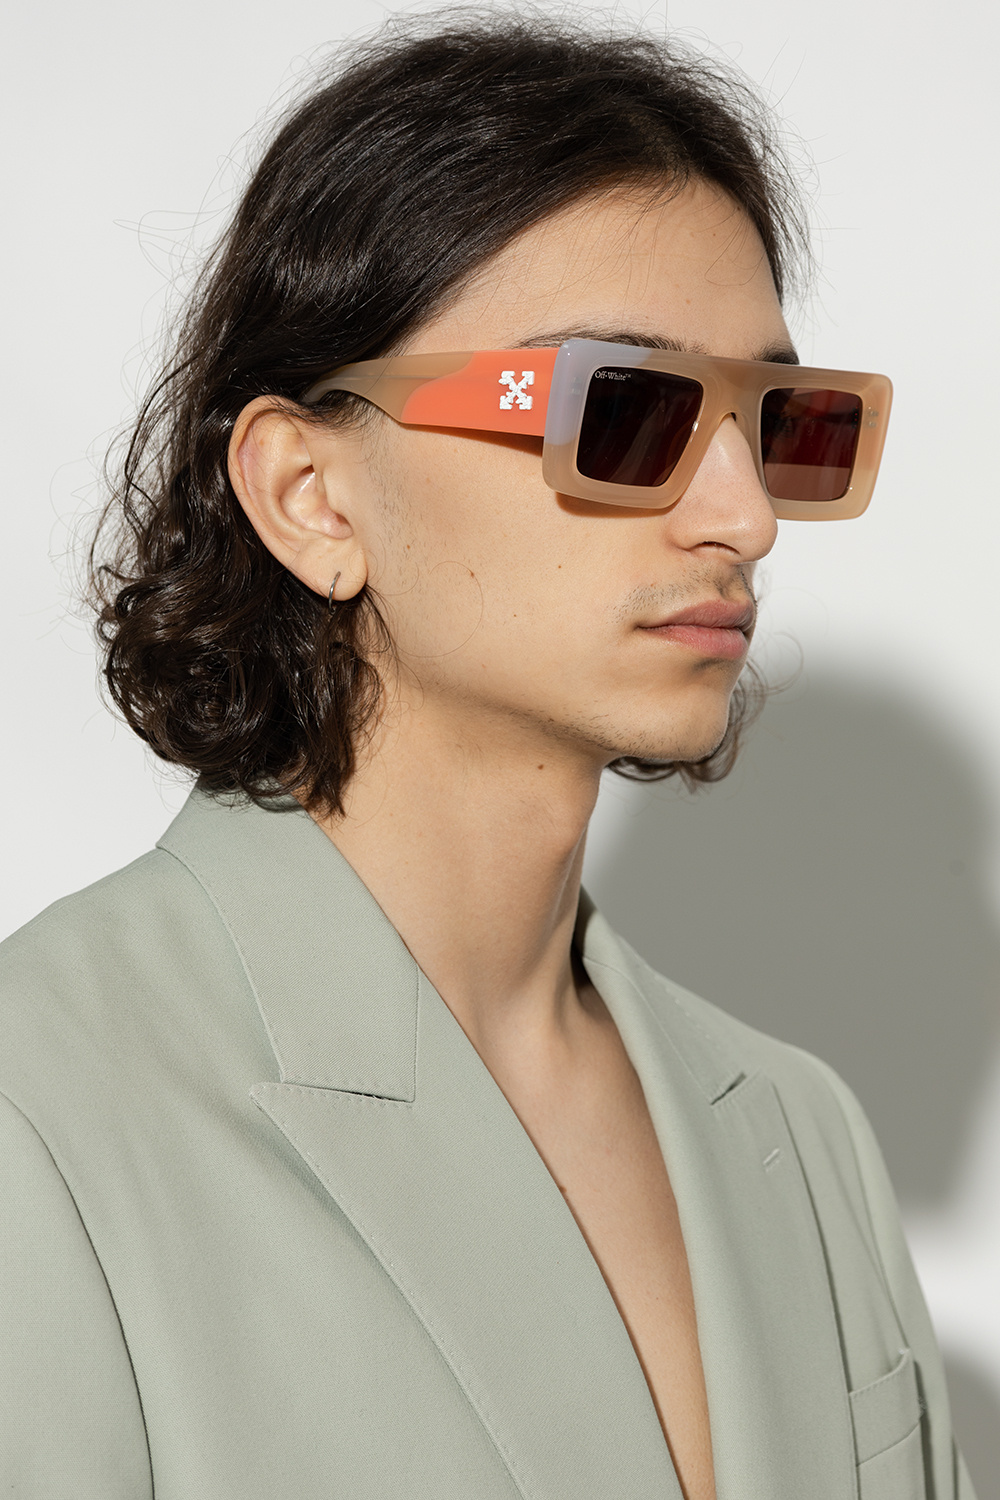 Off-White sunglasses for women's